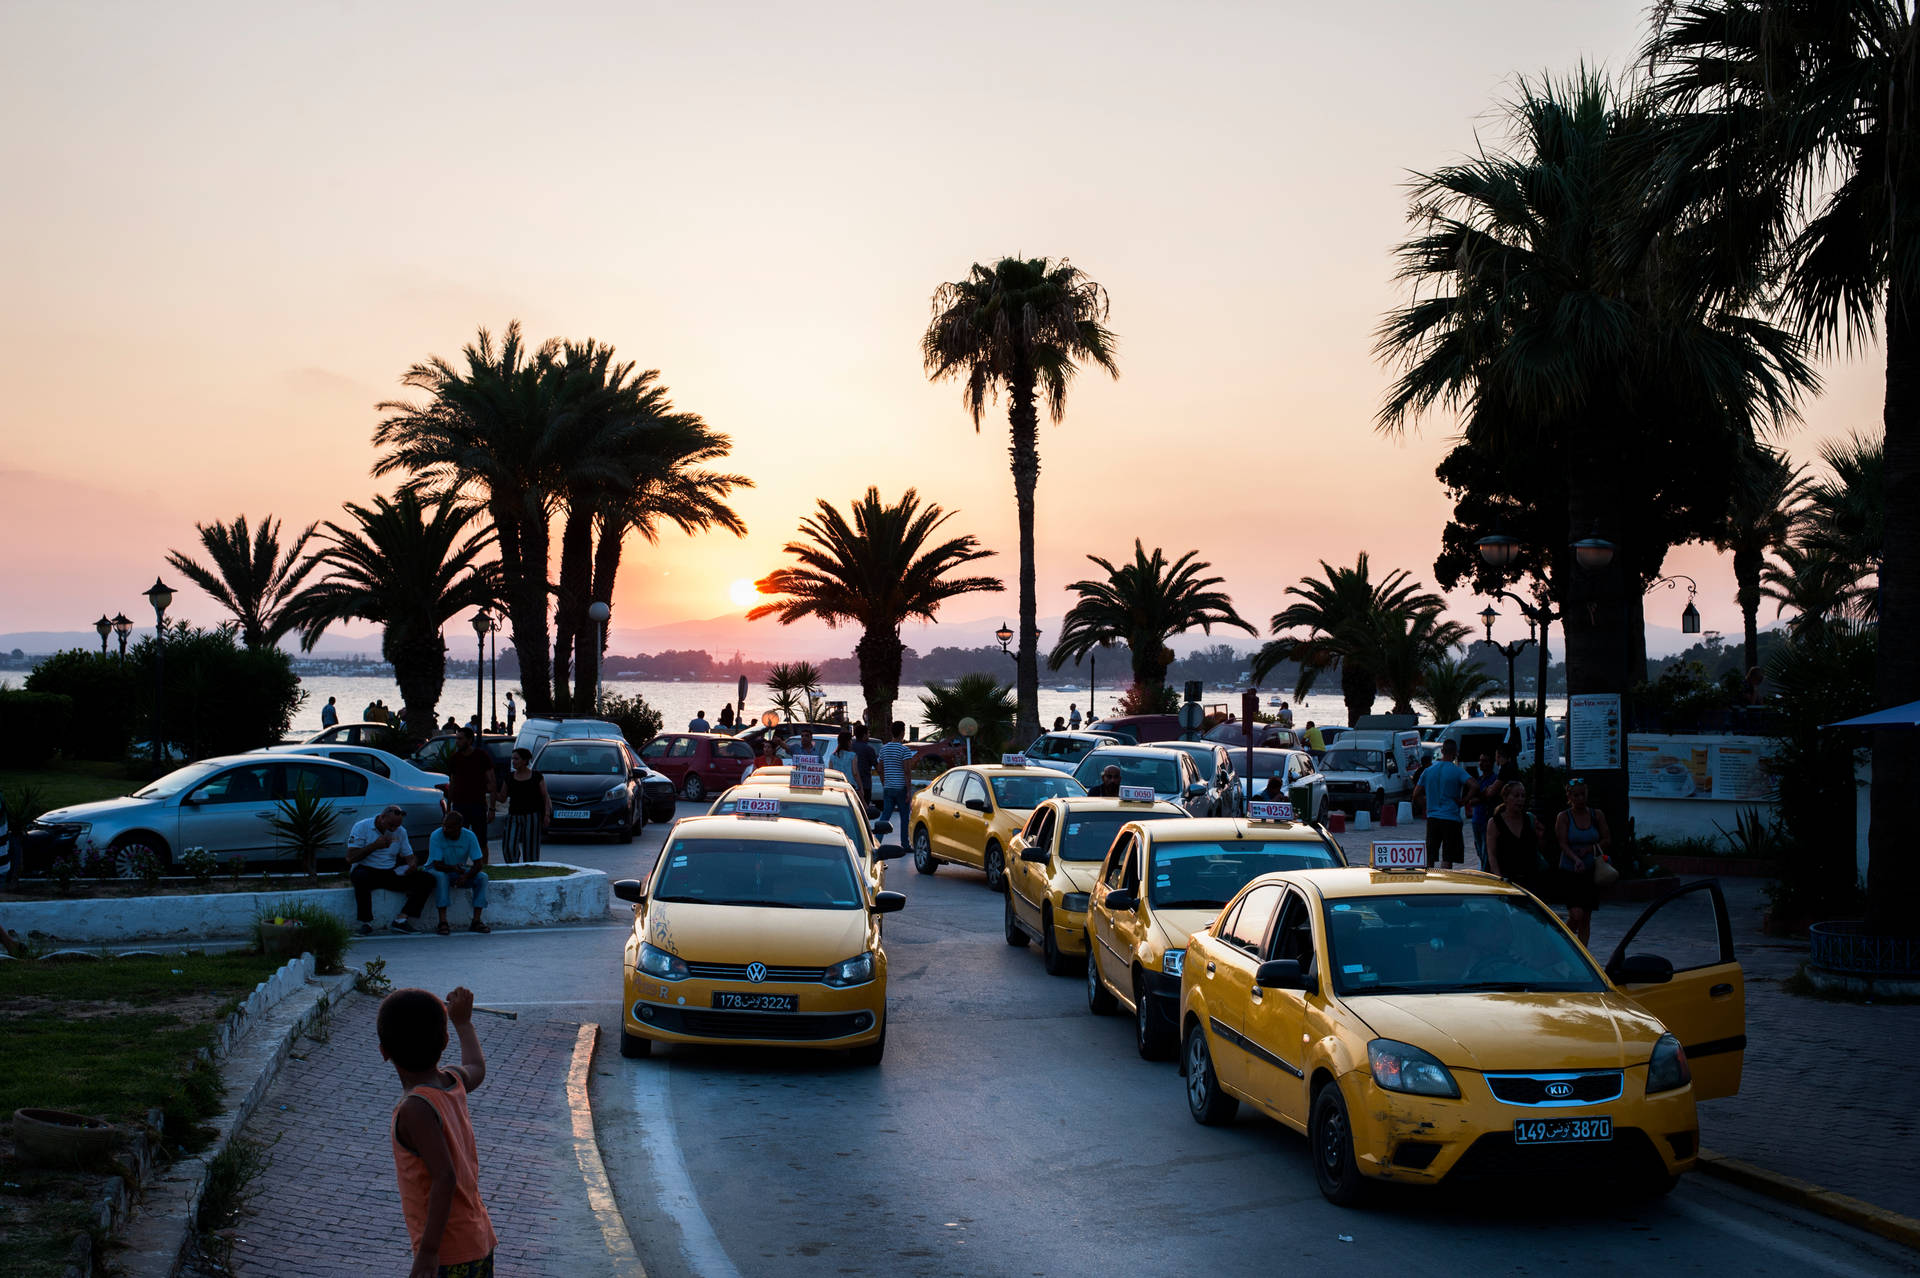 Tunisia Road Full Of Cars